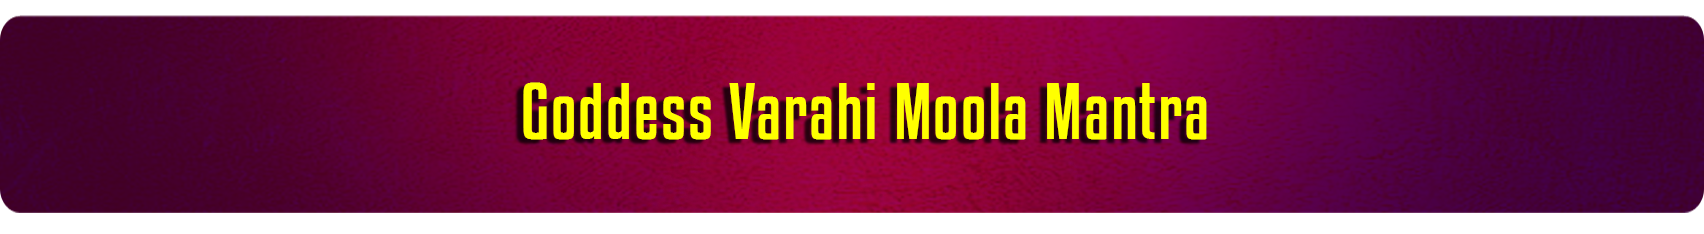 Varahi Moola Mantra